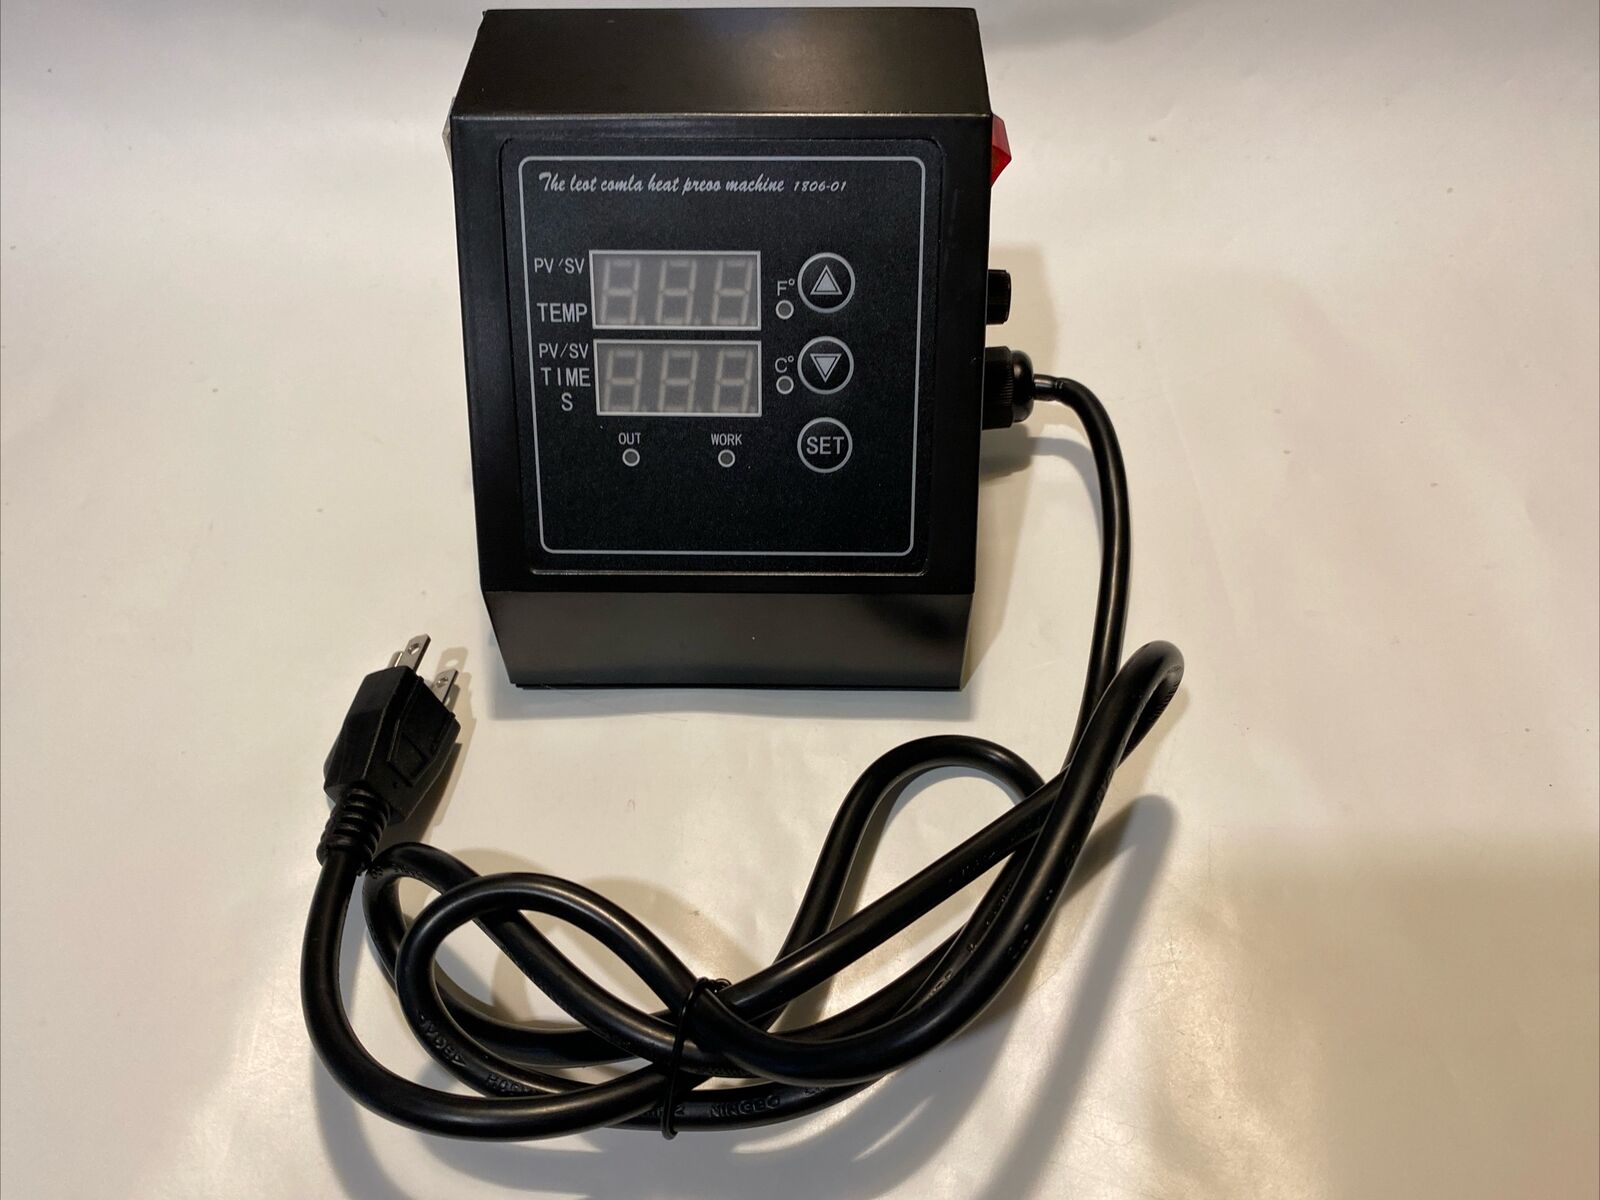 Leot Comla Heat Press Machine Digital LED Control Box 1806-01 New Open Box.